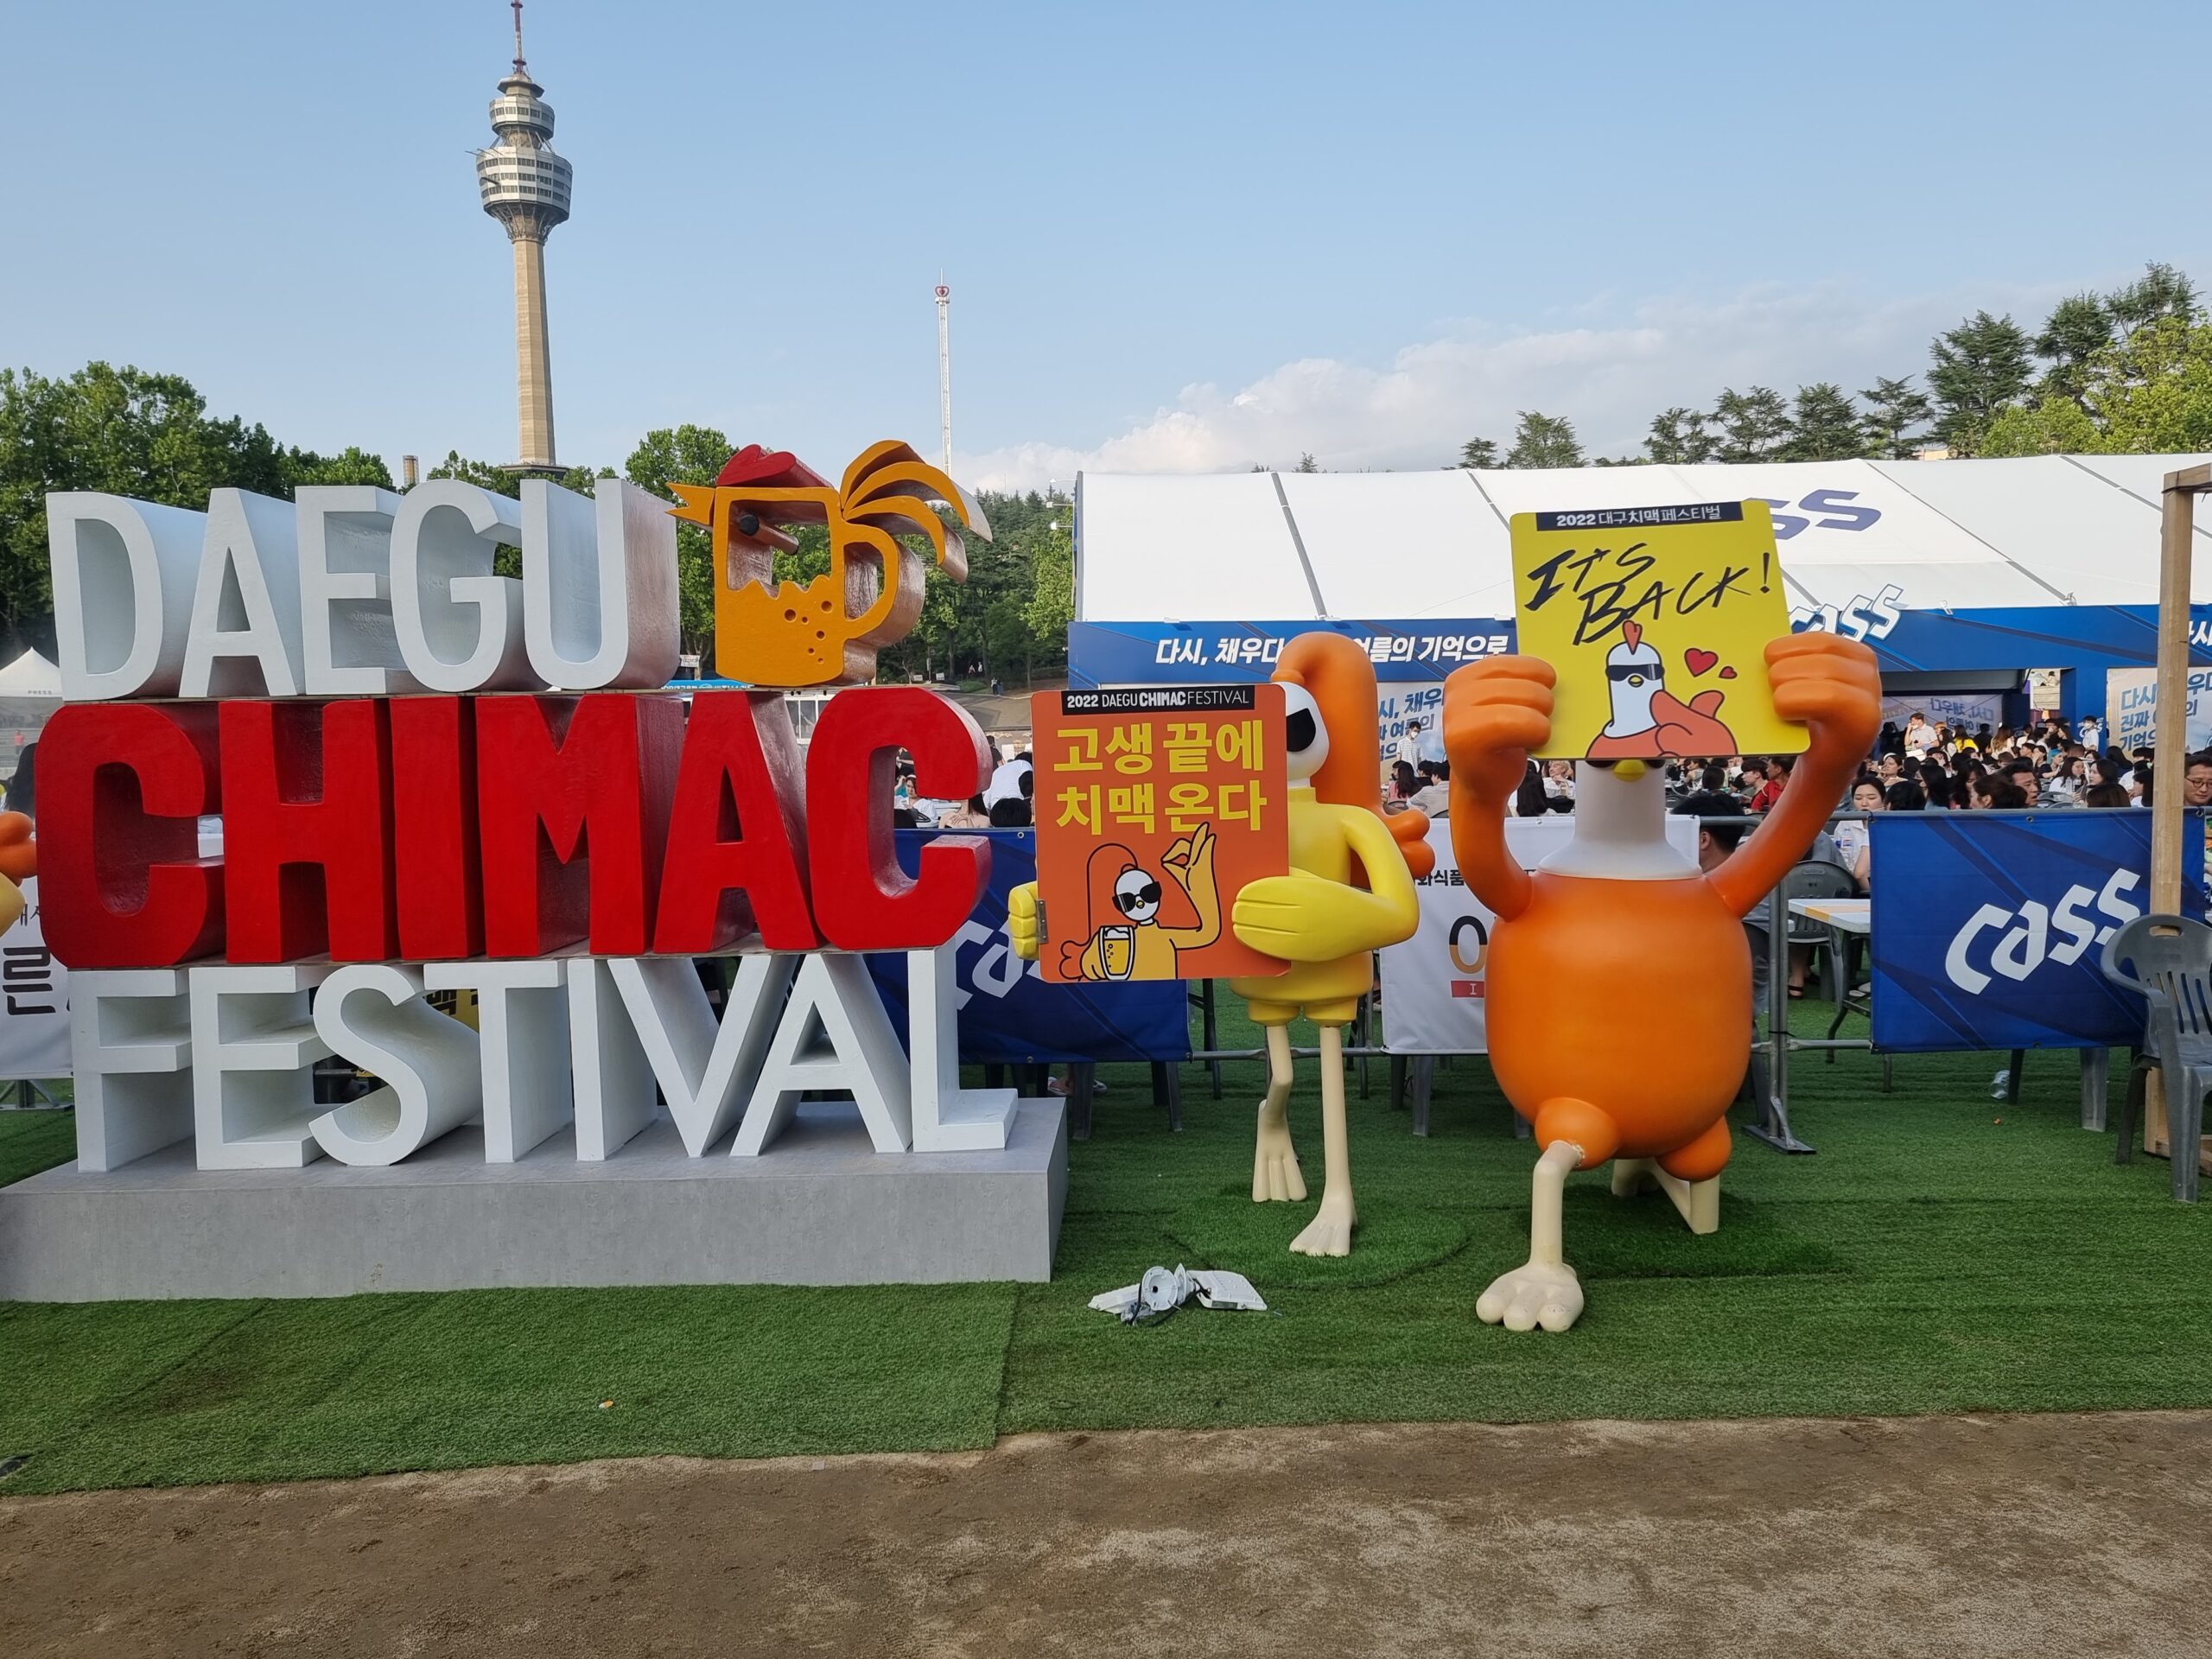 Chimac-Festival-mascot-in-Daegu-scaled Chimac Festival-- Why Chicken and Beer is So Popular in Daegu